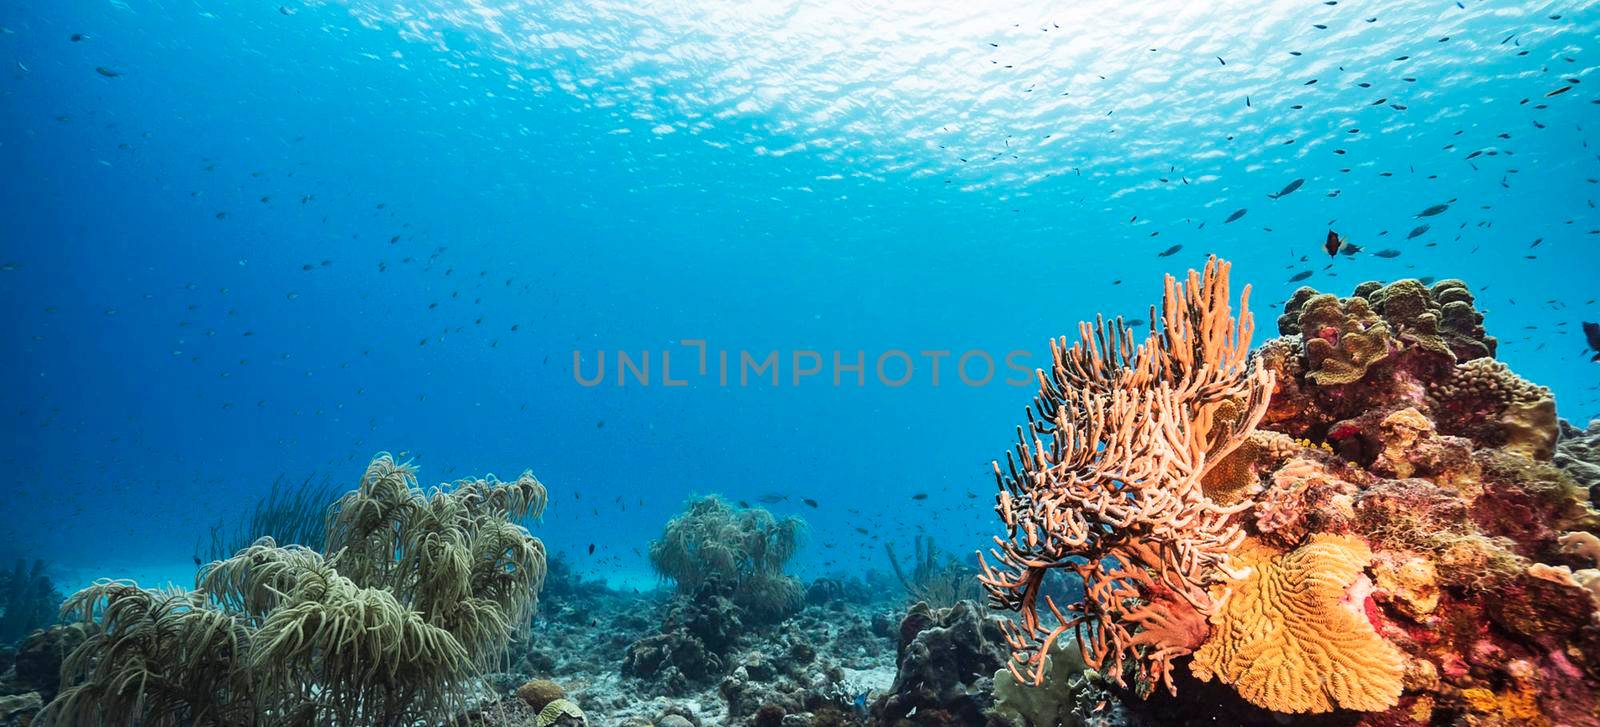 Underwater photoshoot by TravelSync27